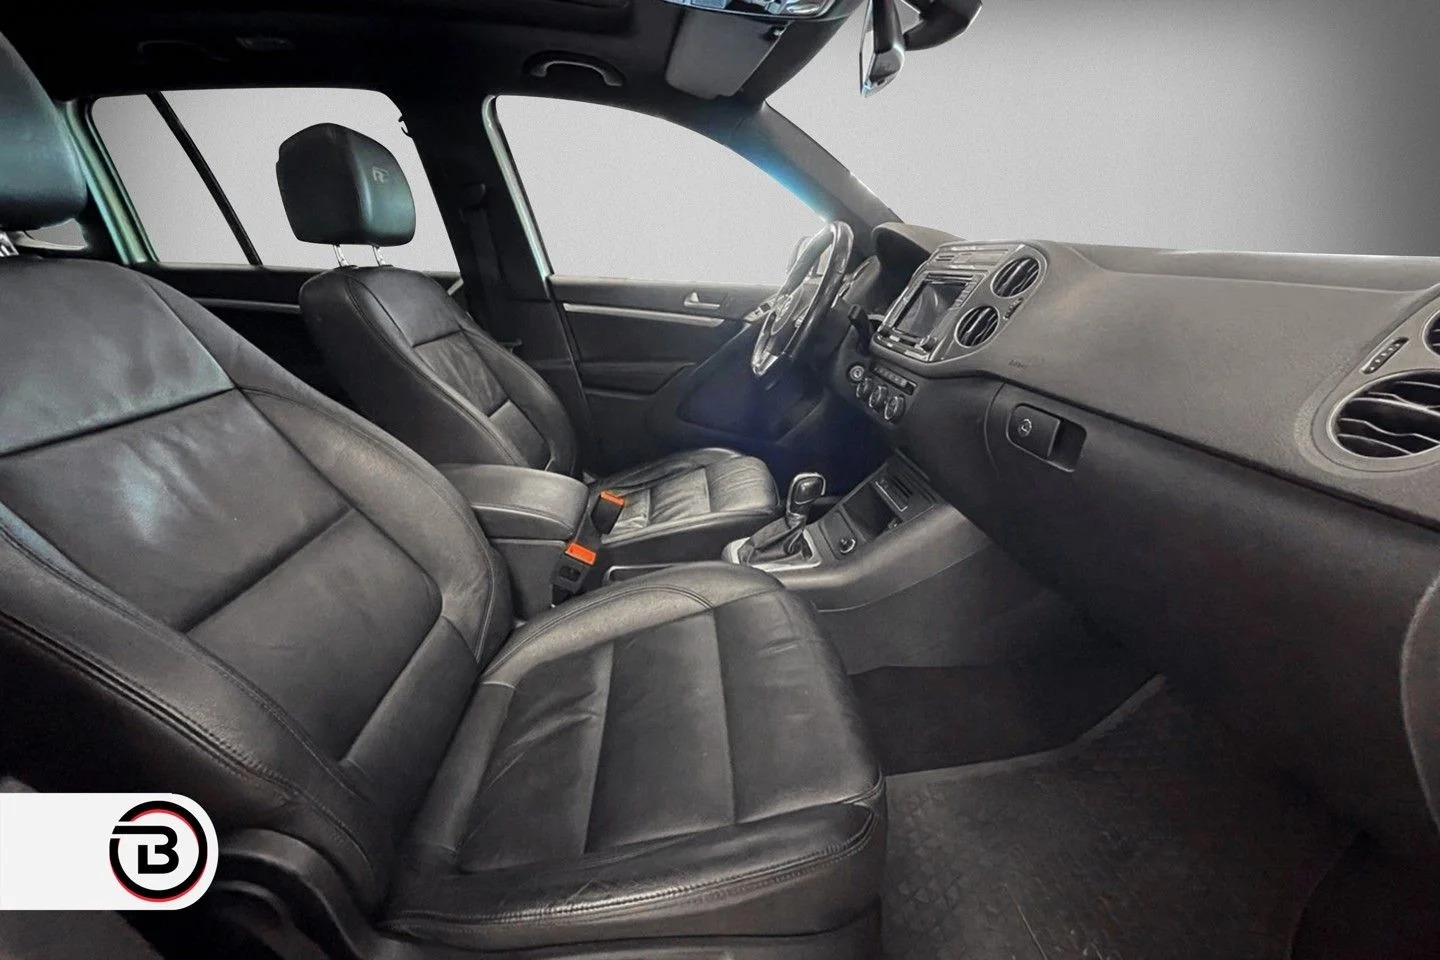 Volkswagen Tiguan 2.0 TDI 4Motion DSG Sekventiell, 184hk, 2016